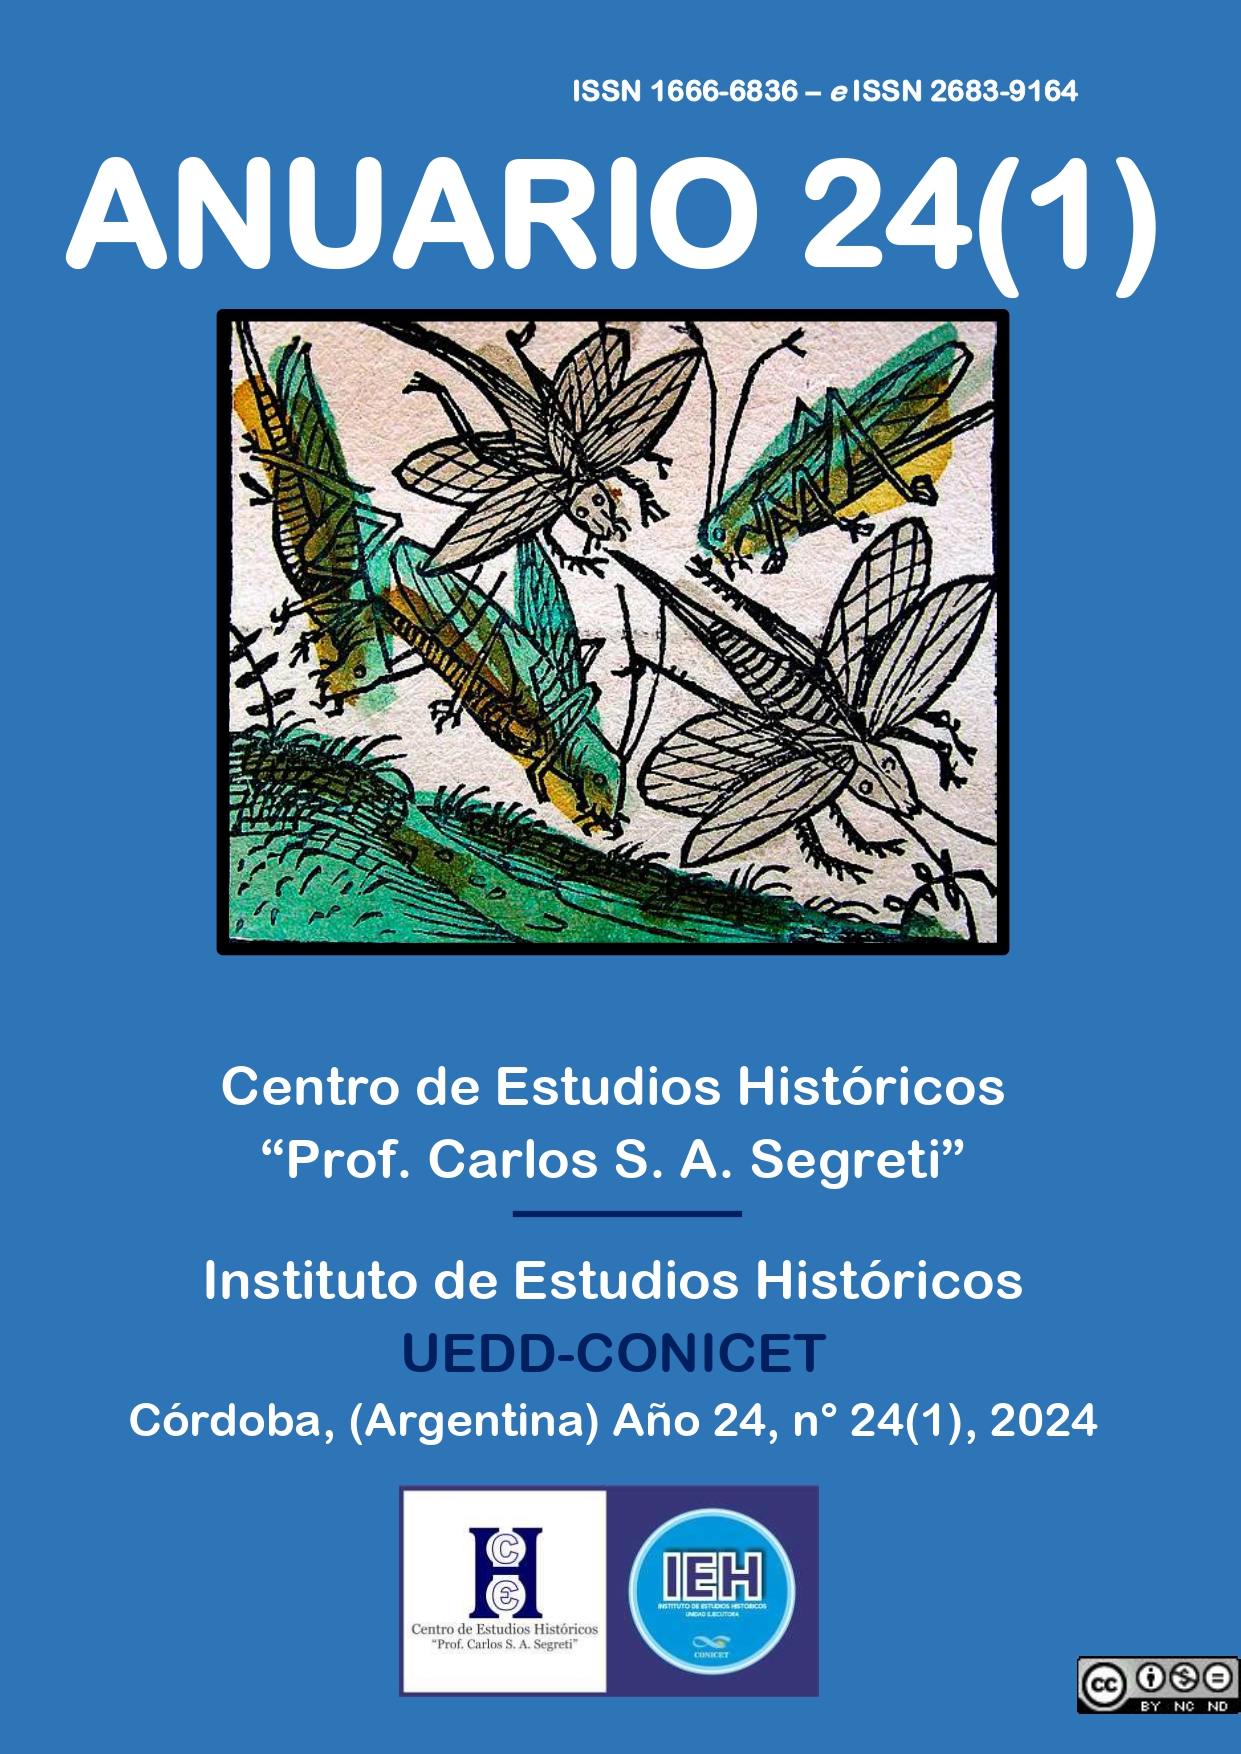 					Ver Vol. 24 Núm. 1 (2024): Anuario del Centro de Estudios Históricos "Prof. Carlos S. A. Segreti" 24(1)
				